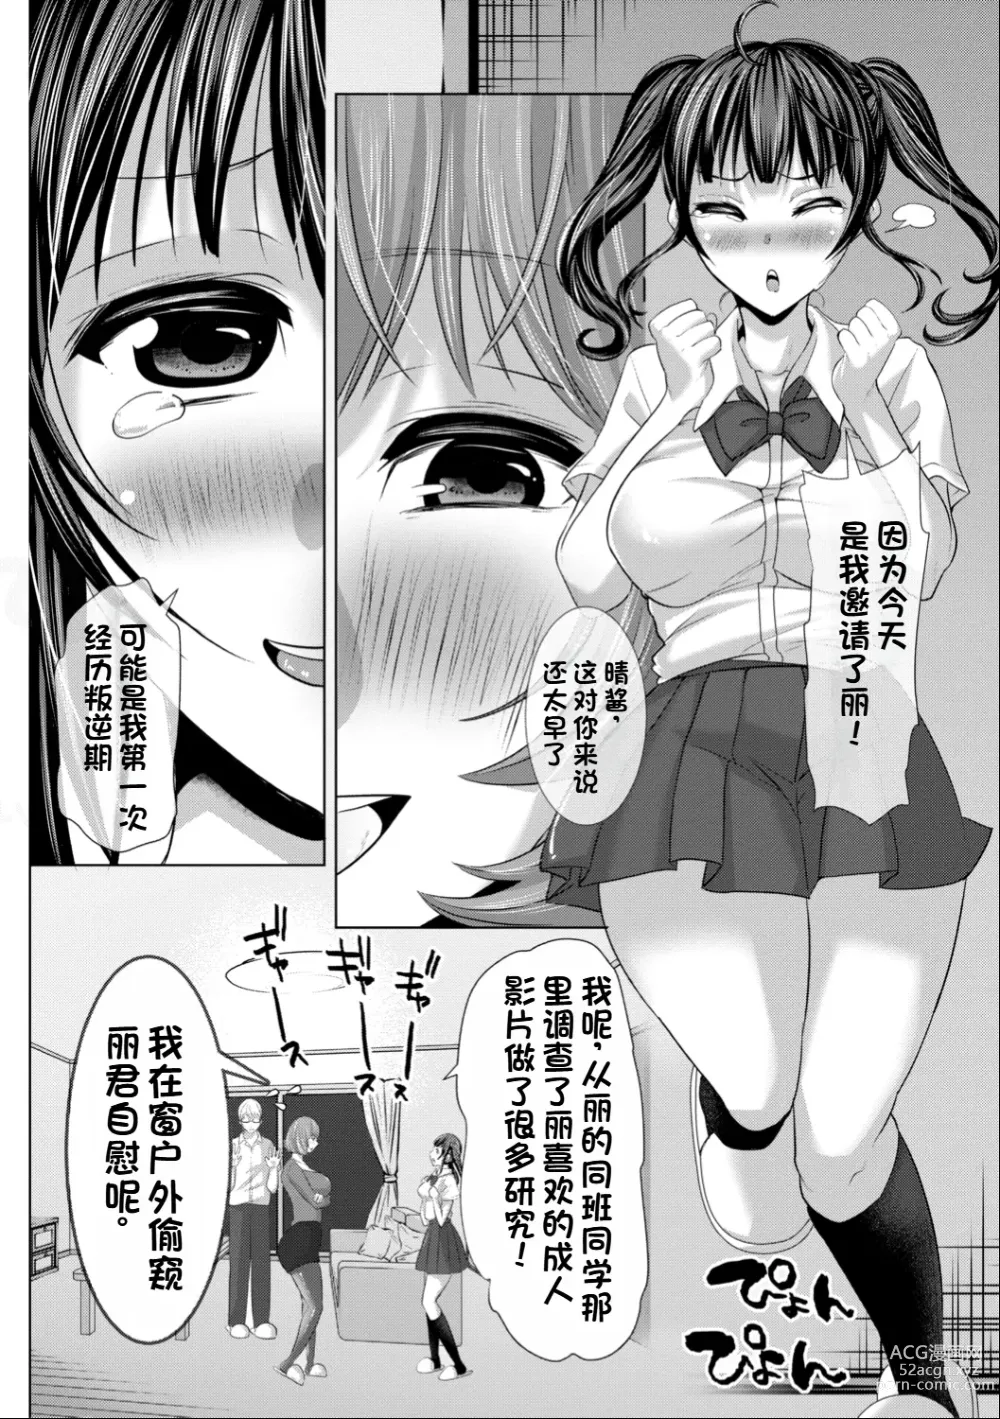 Page 9 of manga Suki Ara Ba Eroi Sitagi Wo Mi Setuke Te Kuru Seiso Bitti Oyako.